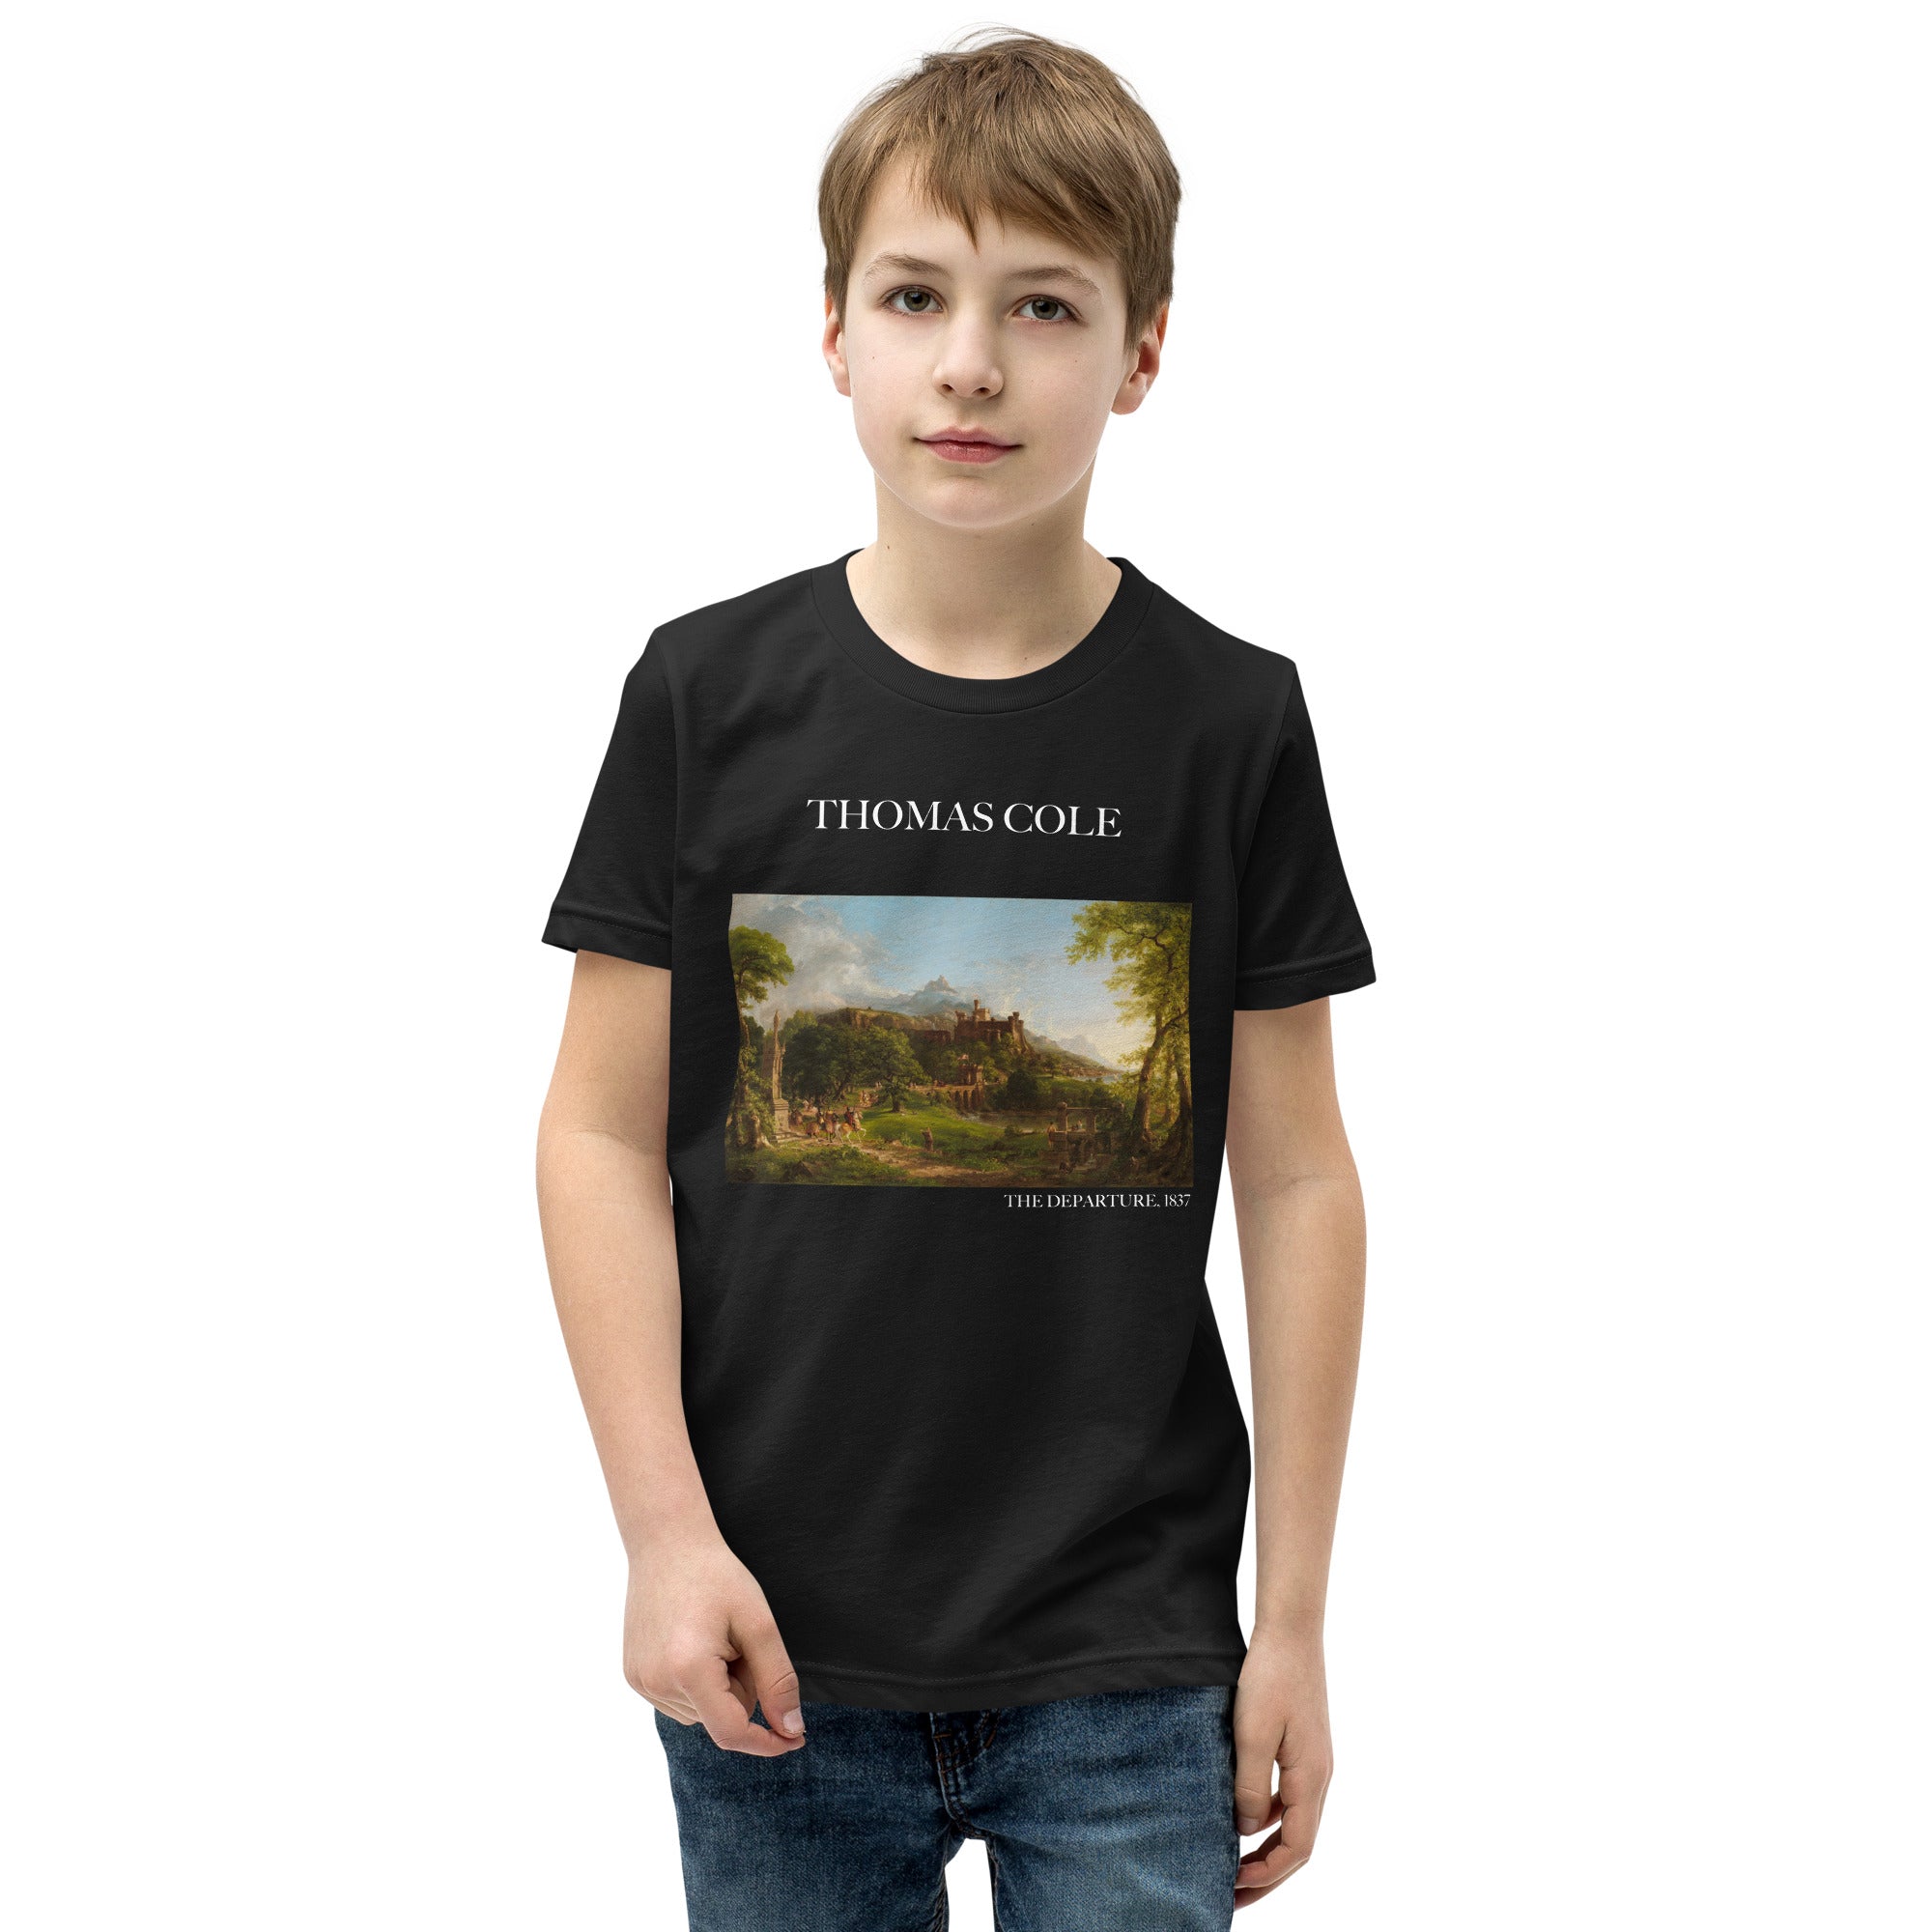 Thomas Cole - Kurzärmeliges T-Shirt mit berühmtem Gemälde „The Departure“ | Premium-Kunst-T-Shirt für Jugendliche